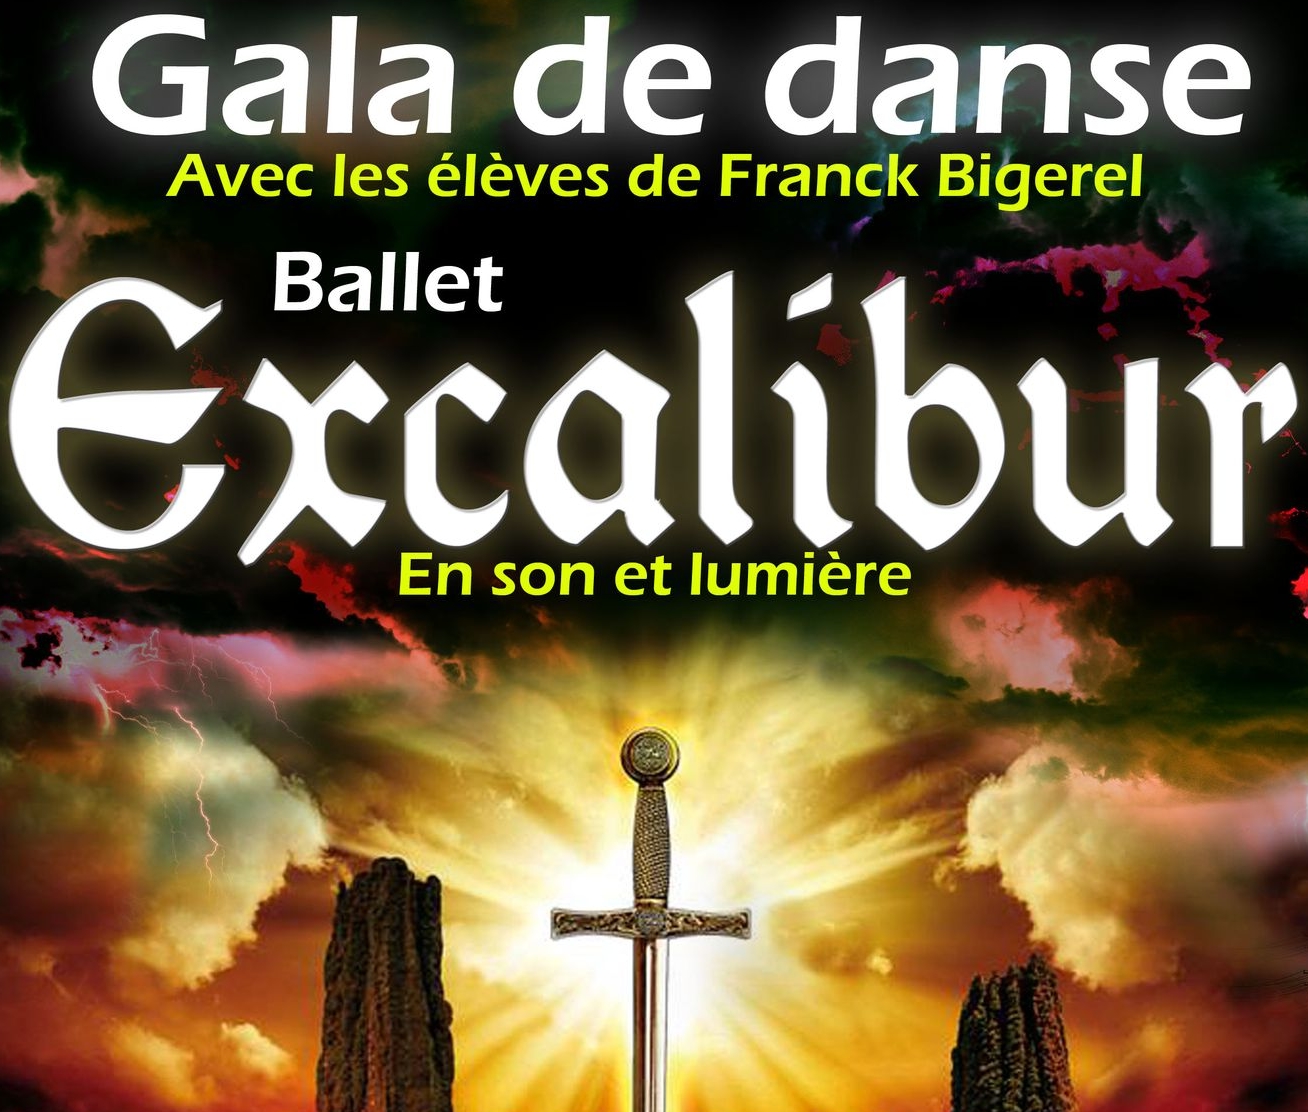 You are currently viewing Gala de danse – Ballet Excalibur (24 juin 2023)